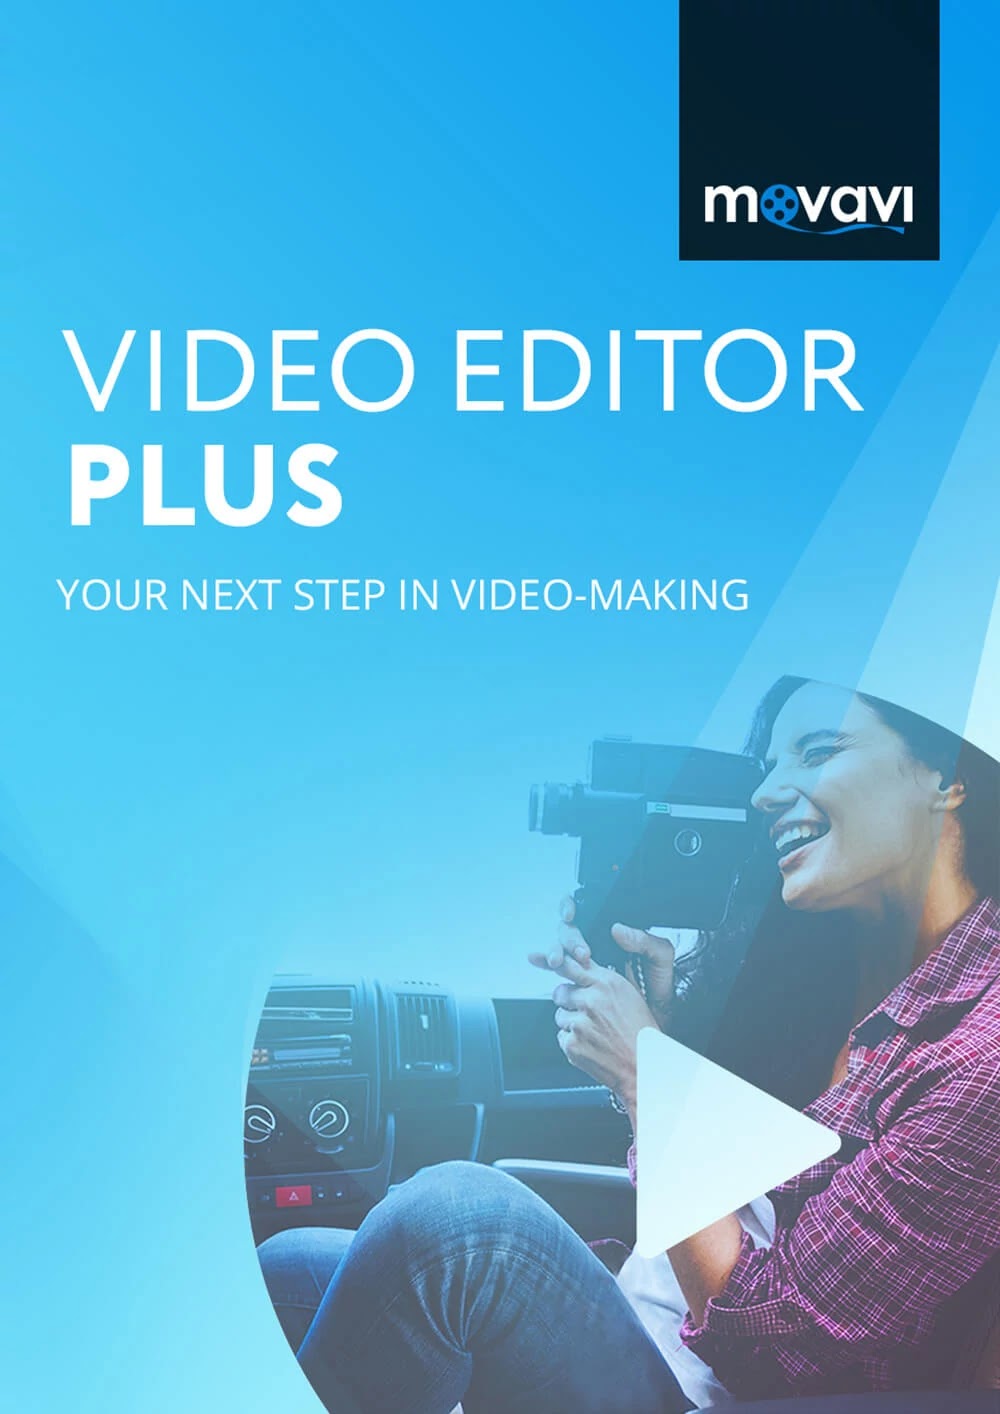 MOVAVI VIDEO EDITOR PLUS 2020 - STEAM - PC - WORLDWIDE - MULTILANGUAGE - Libelula Vesela - Software